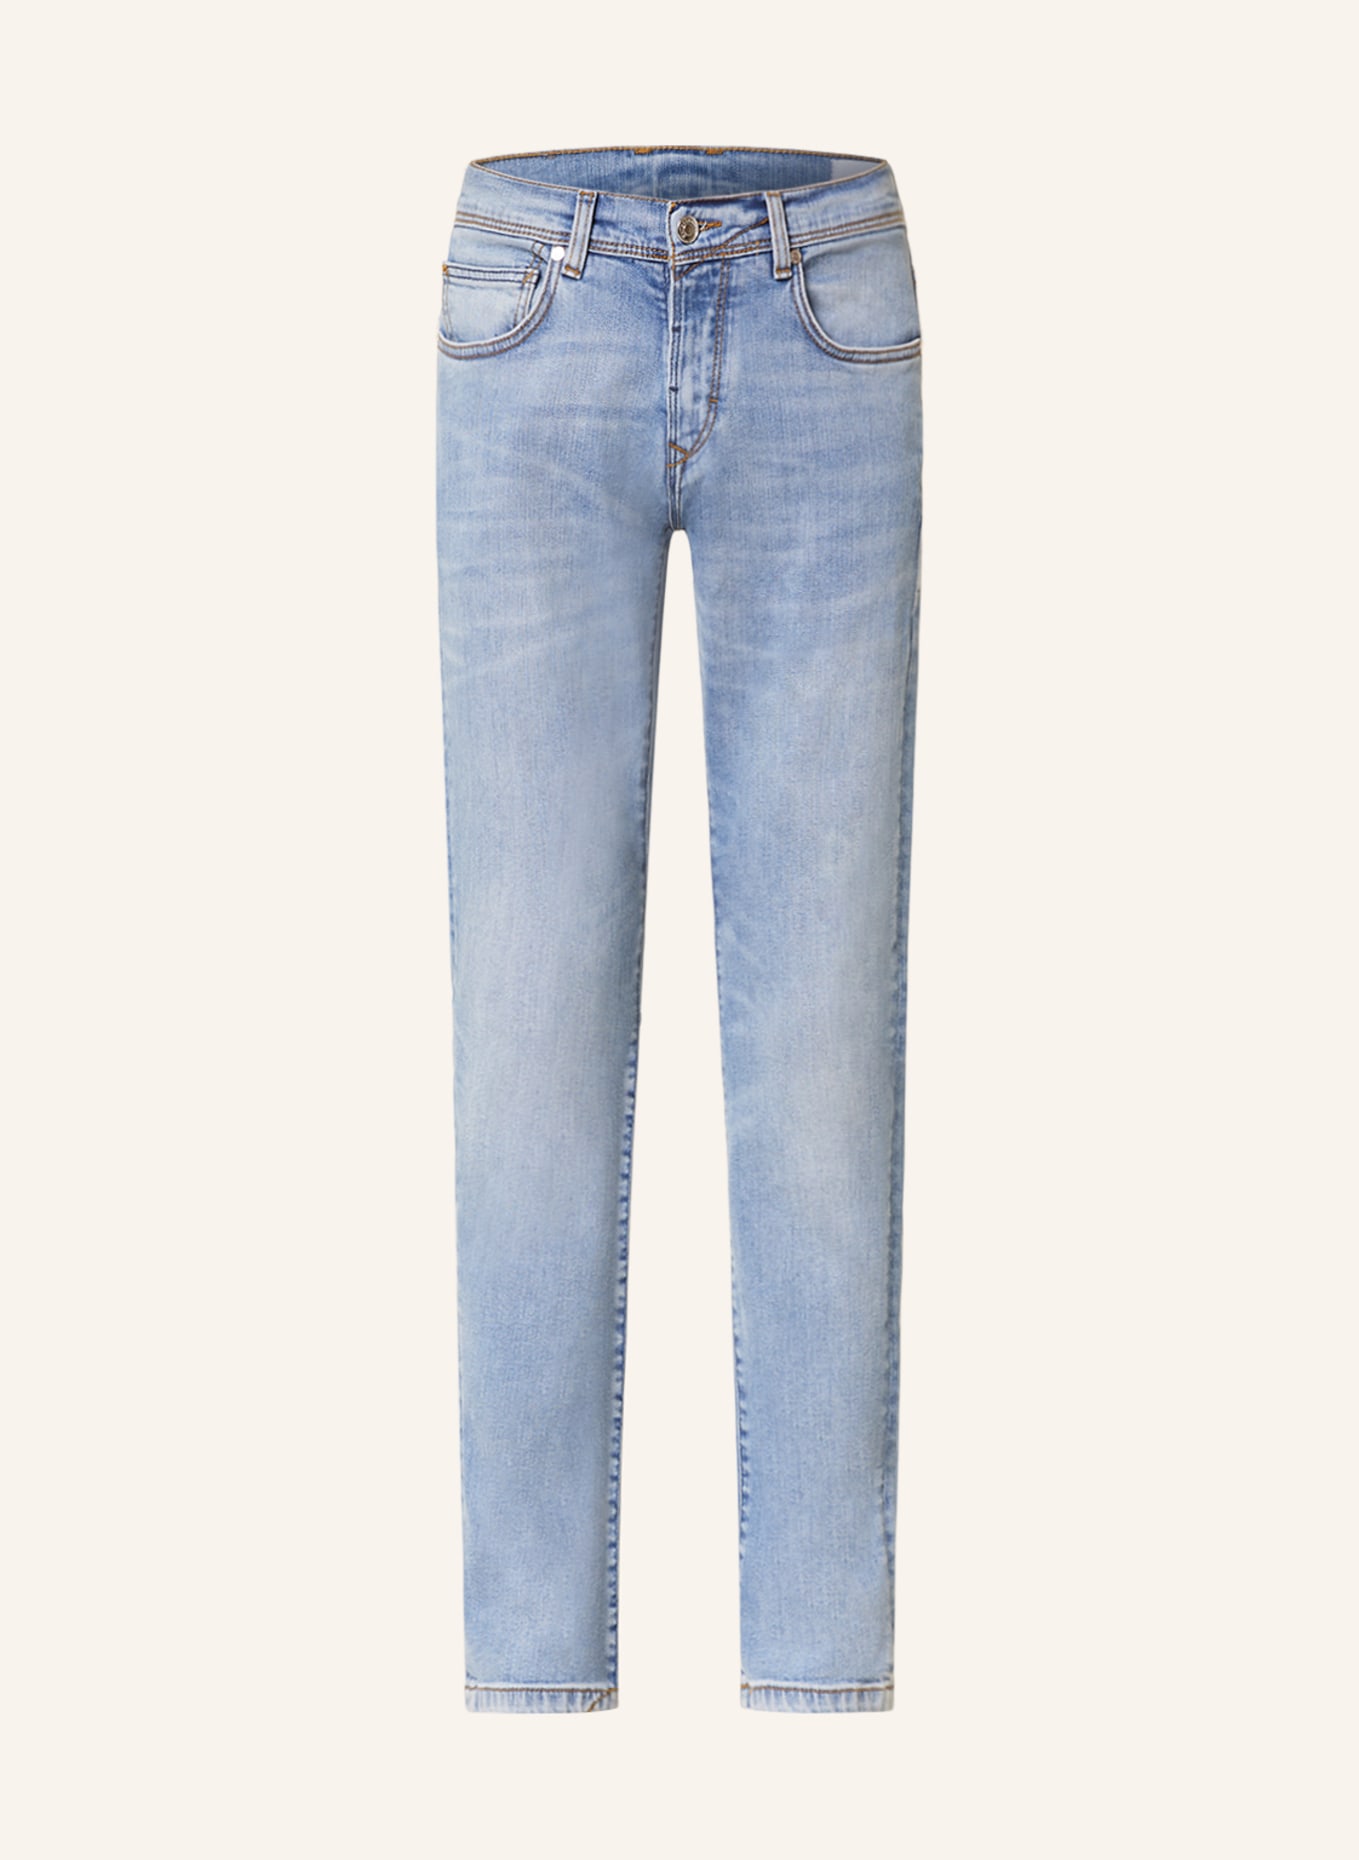 BALDESSARINI Jeans Tapered Fit, Farbe: 6846 light blue used mustache (Bild 1)